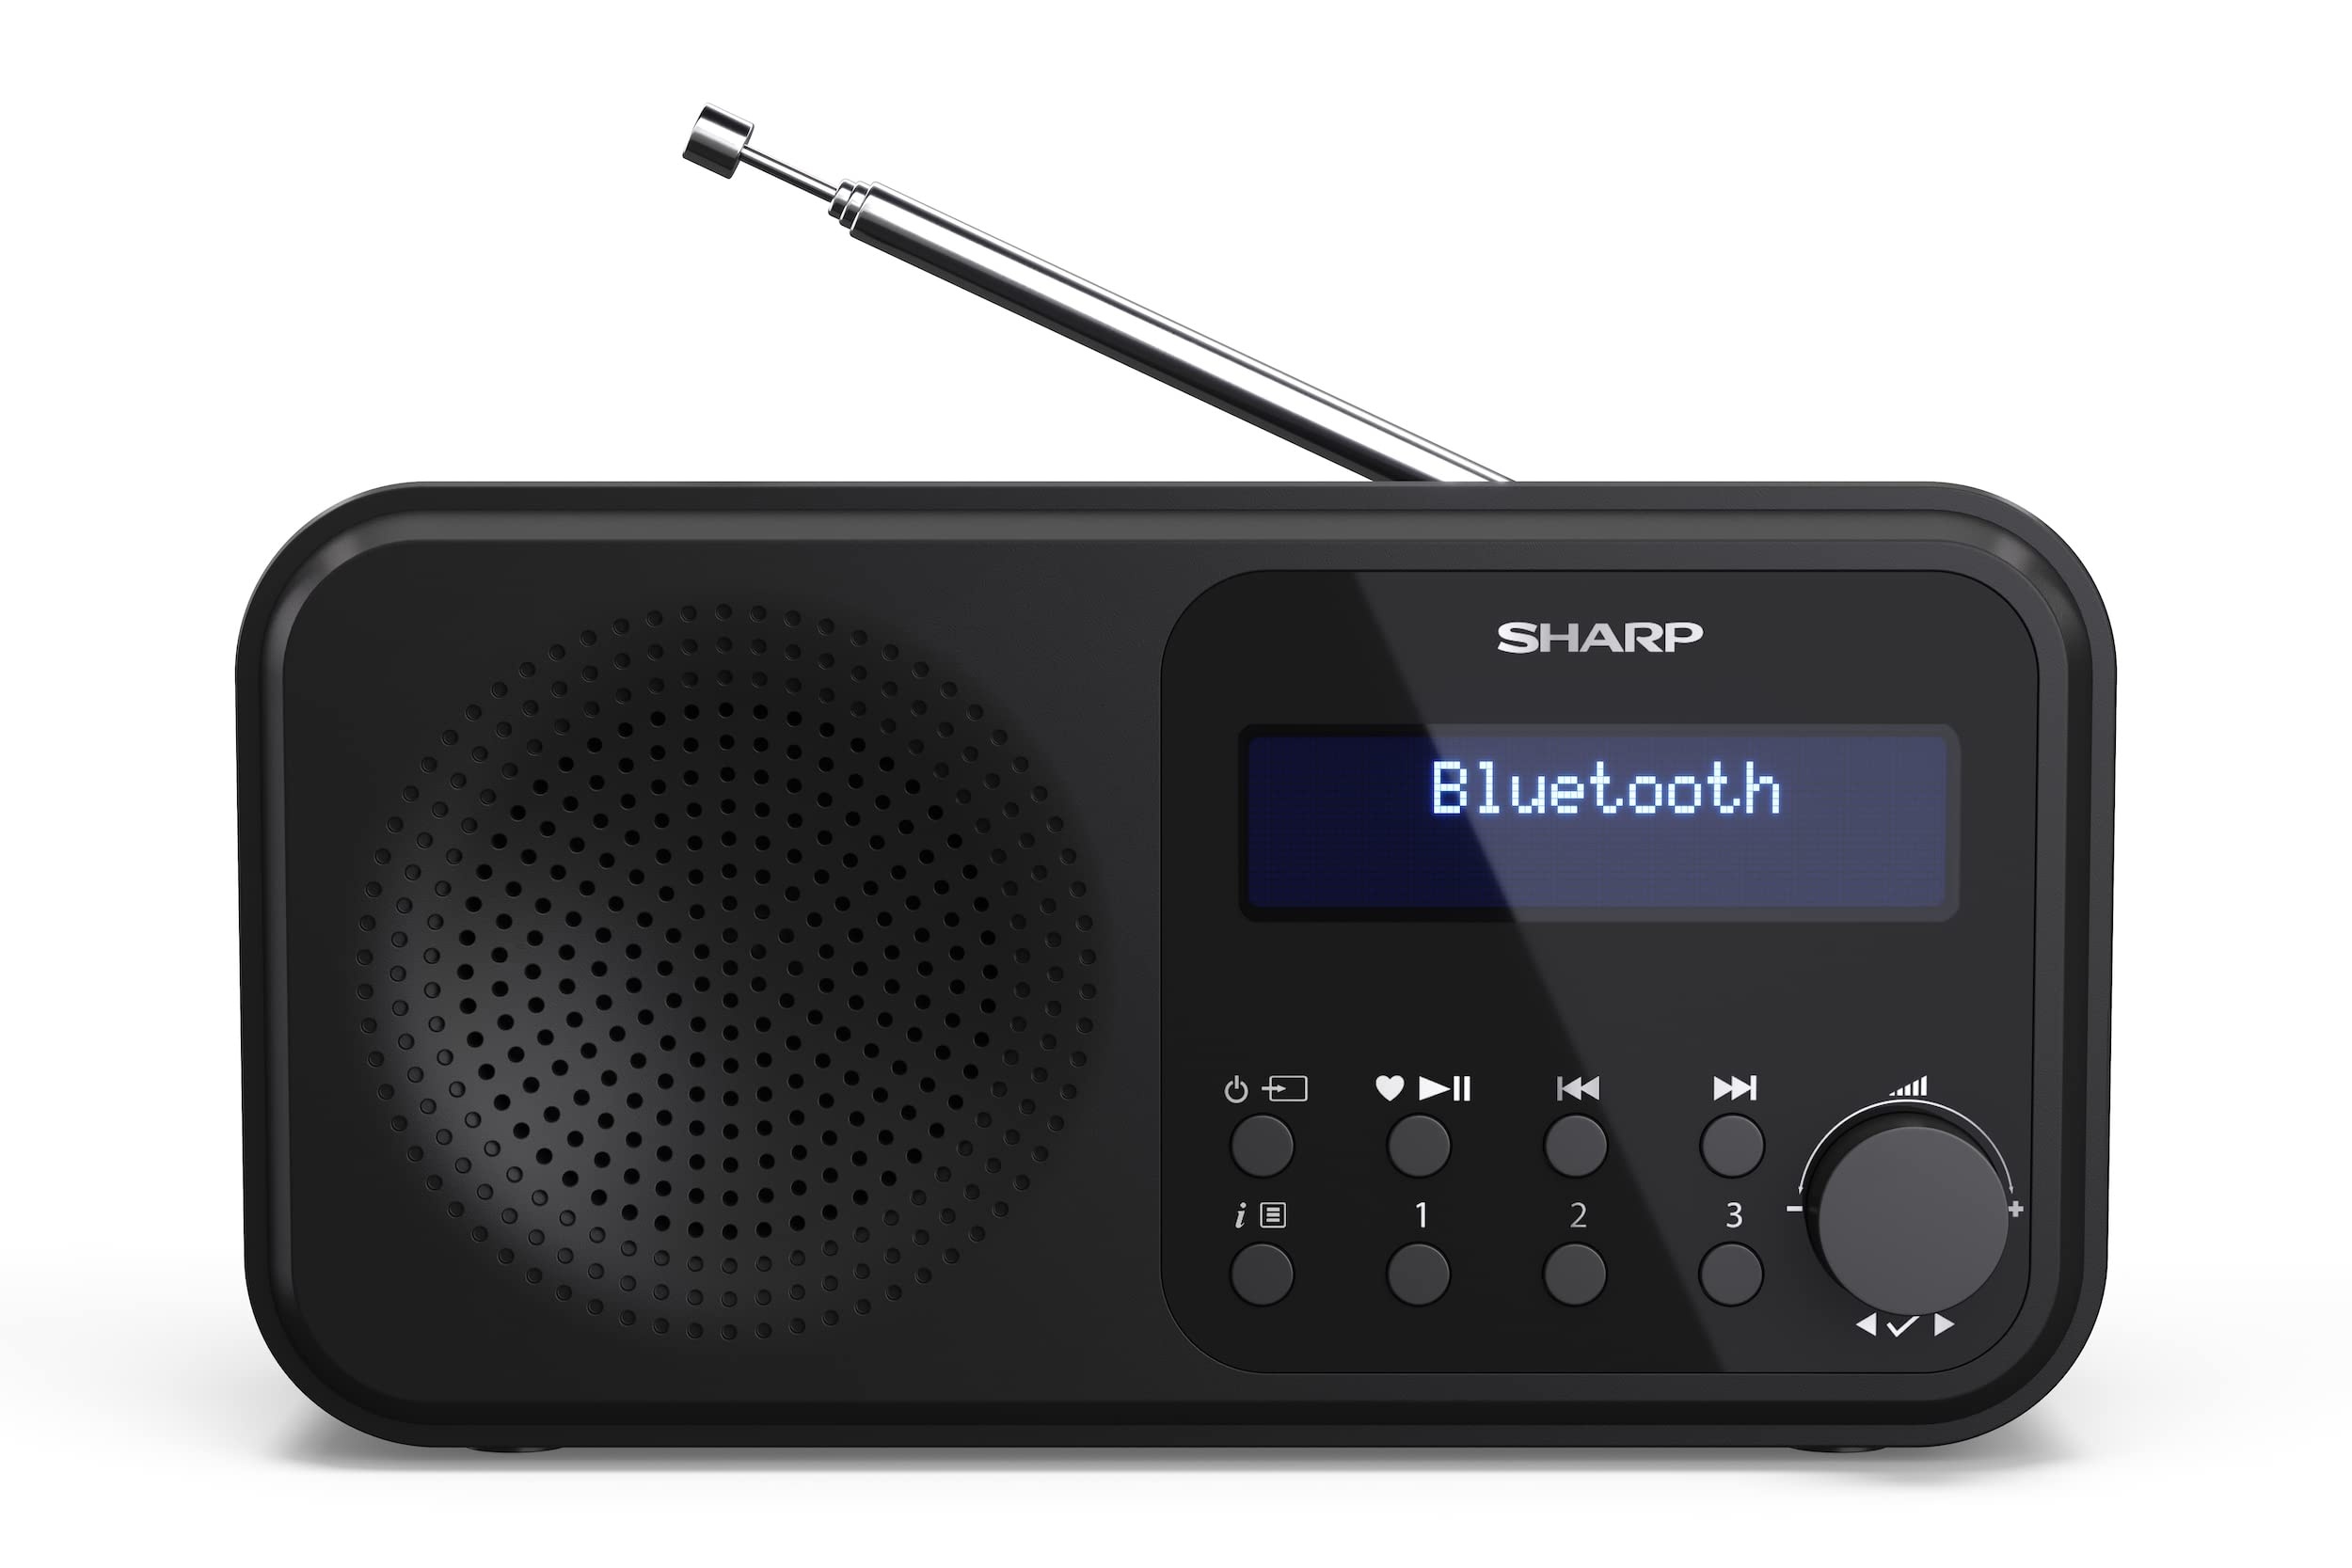 SHARP DR-P420 Portables Digitalradio (DAB/DAB+/FM mit RDS, USB, Bluetooth 5.0, 3,5mm Klinke Wecker-Funktionen), Schwarz